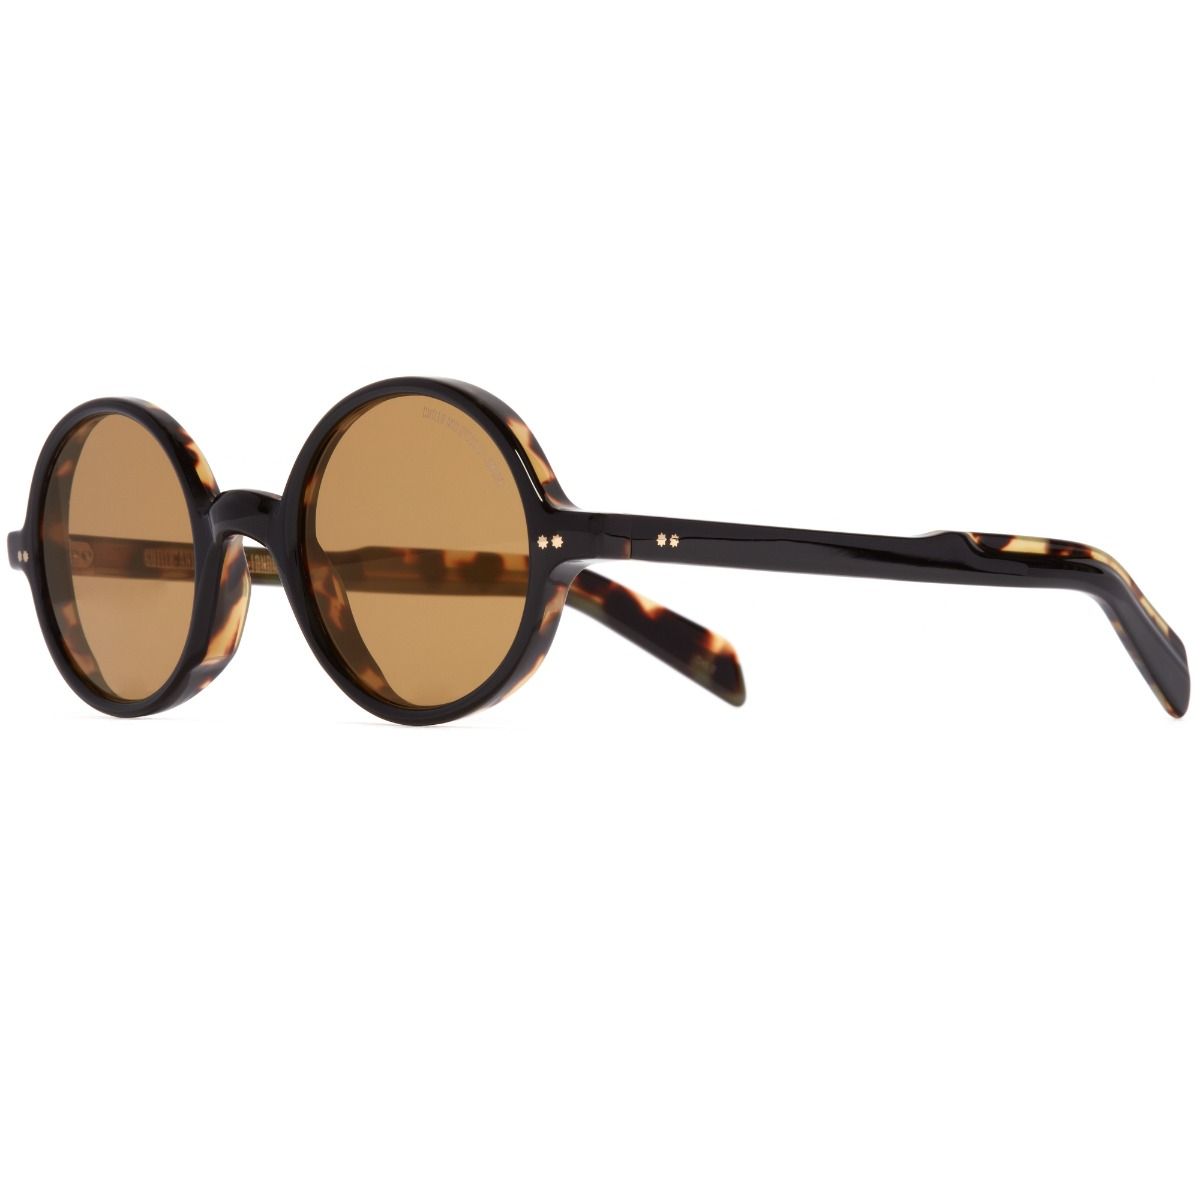 GR01 Round Sunglasses